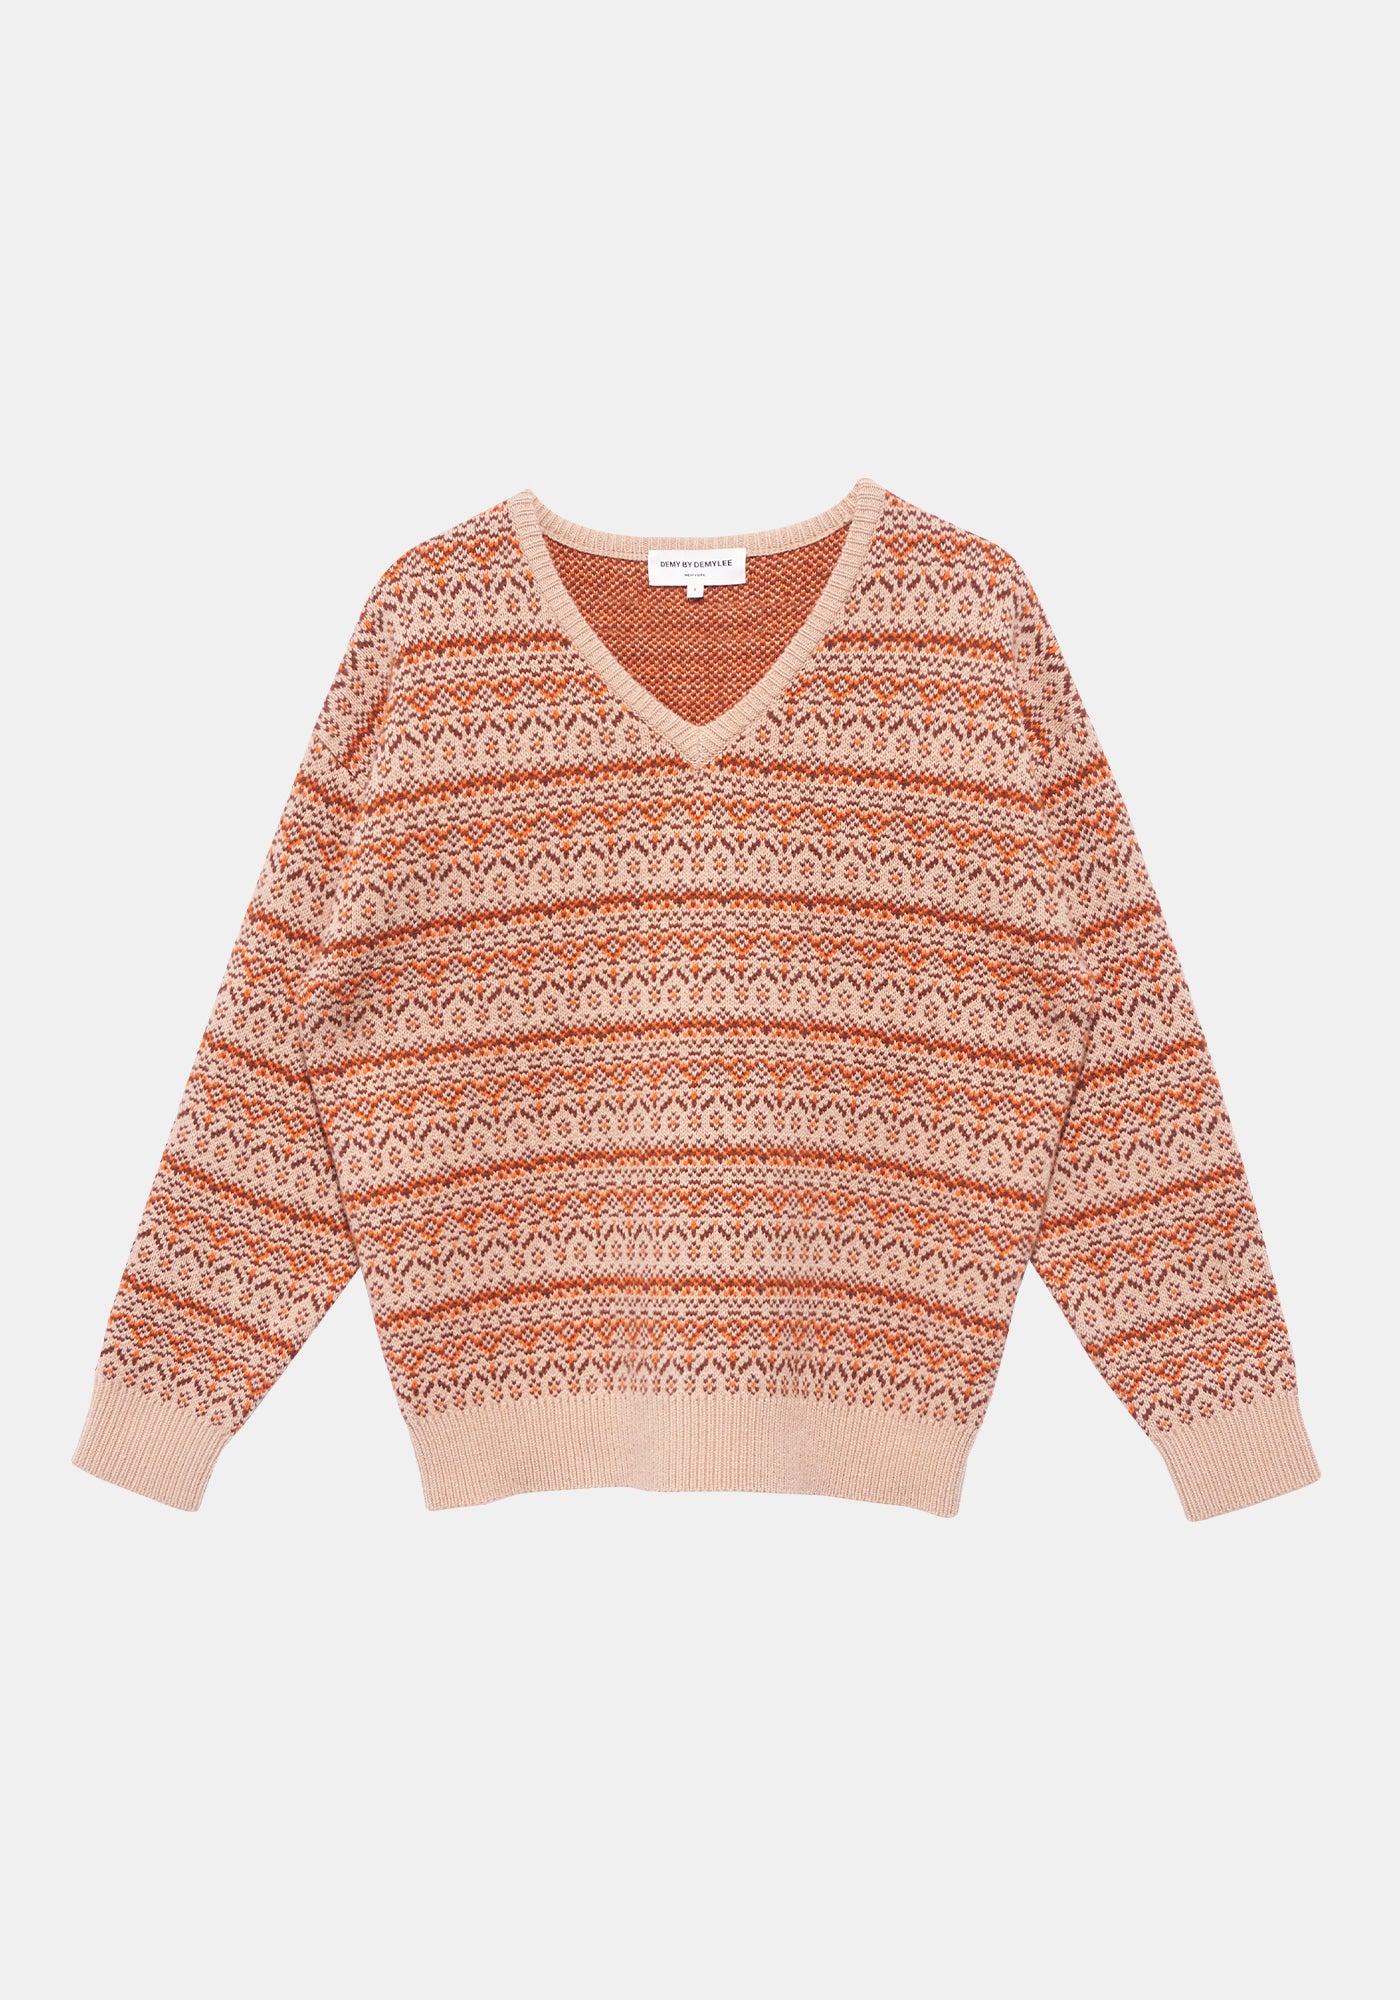 Midori Merino Wool Sweater